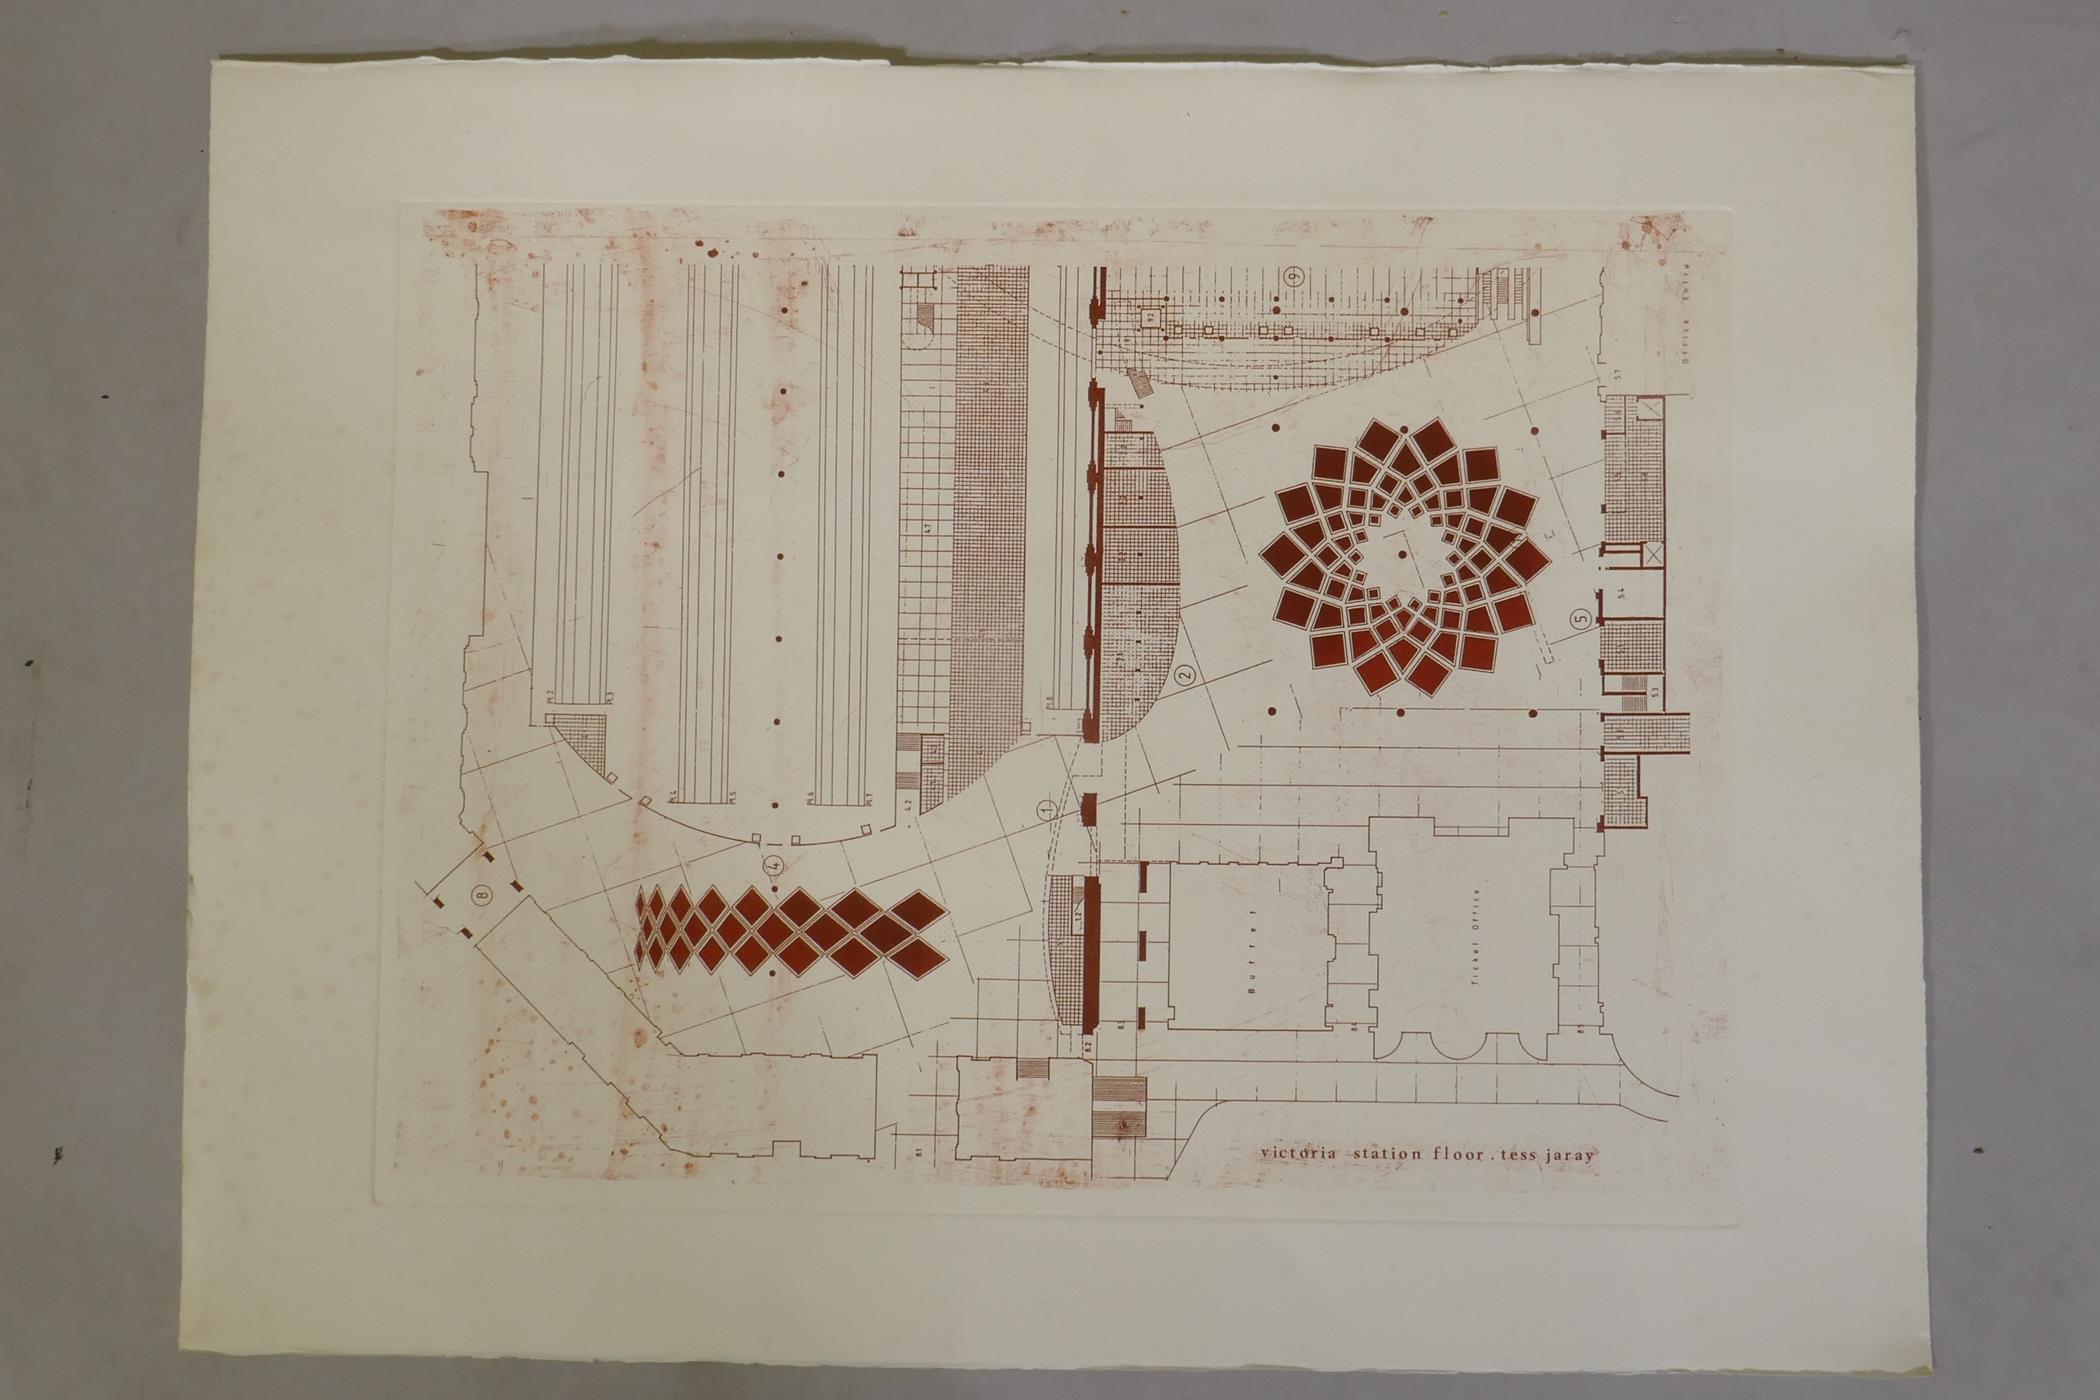 Tess Jaray RA, (British, b.1937), Victorian Station Floor, etching, unsigned; Provenance: Ex- - Image 4 of 4